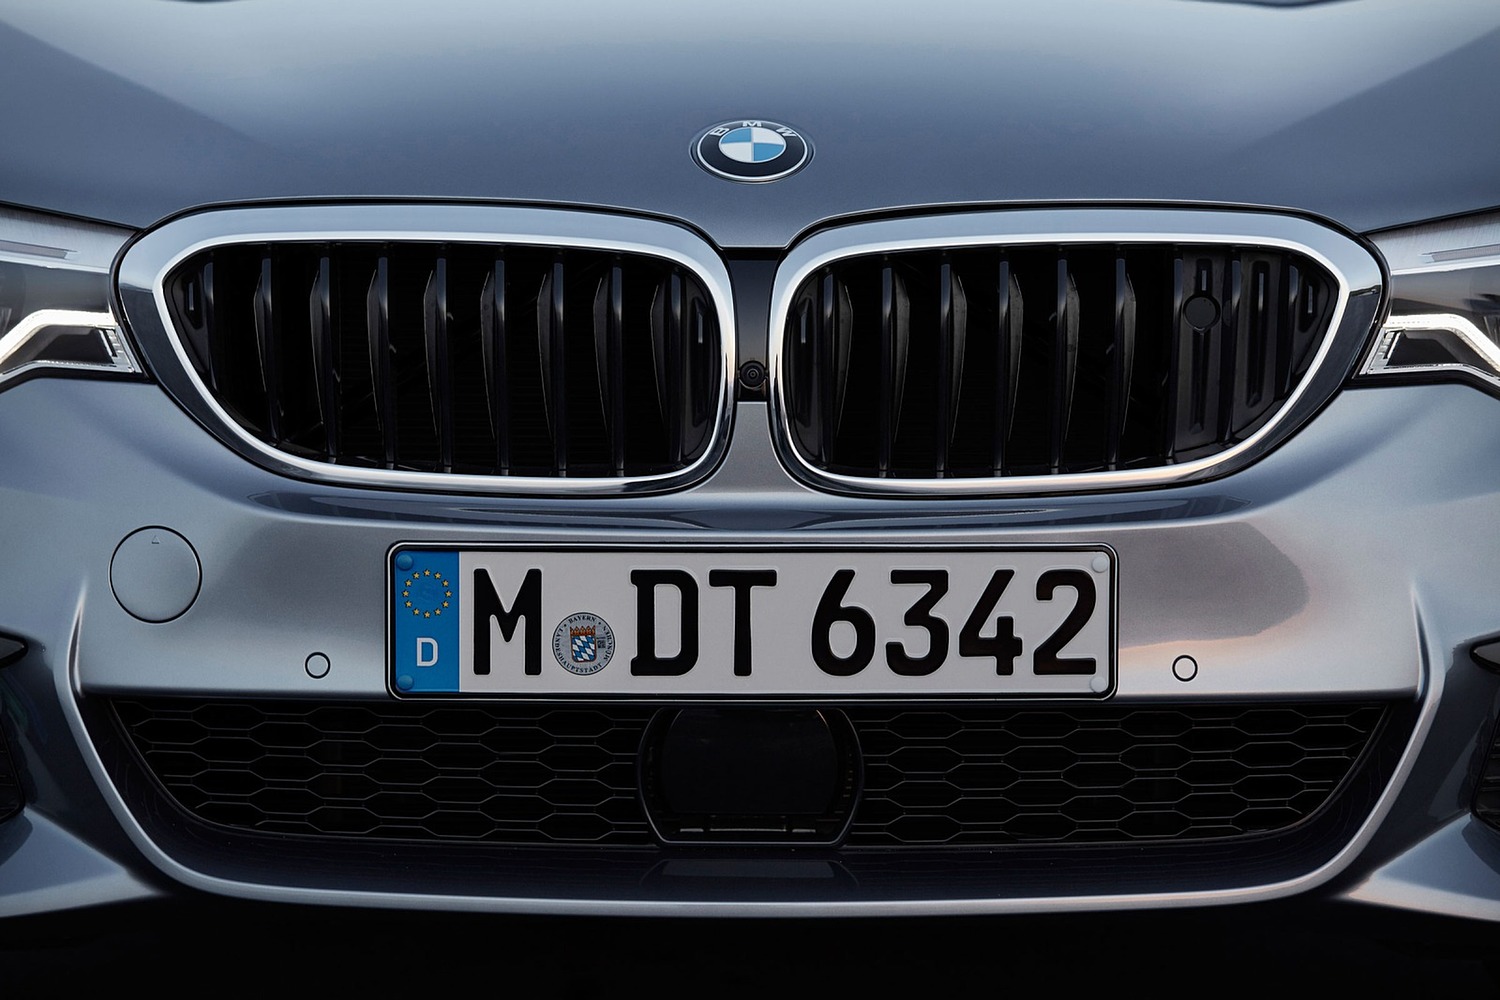 BMW 5 Series 540i Sedan Exterior Detail. M Package Shown. (2017 model year shown)